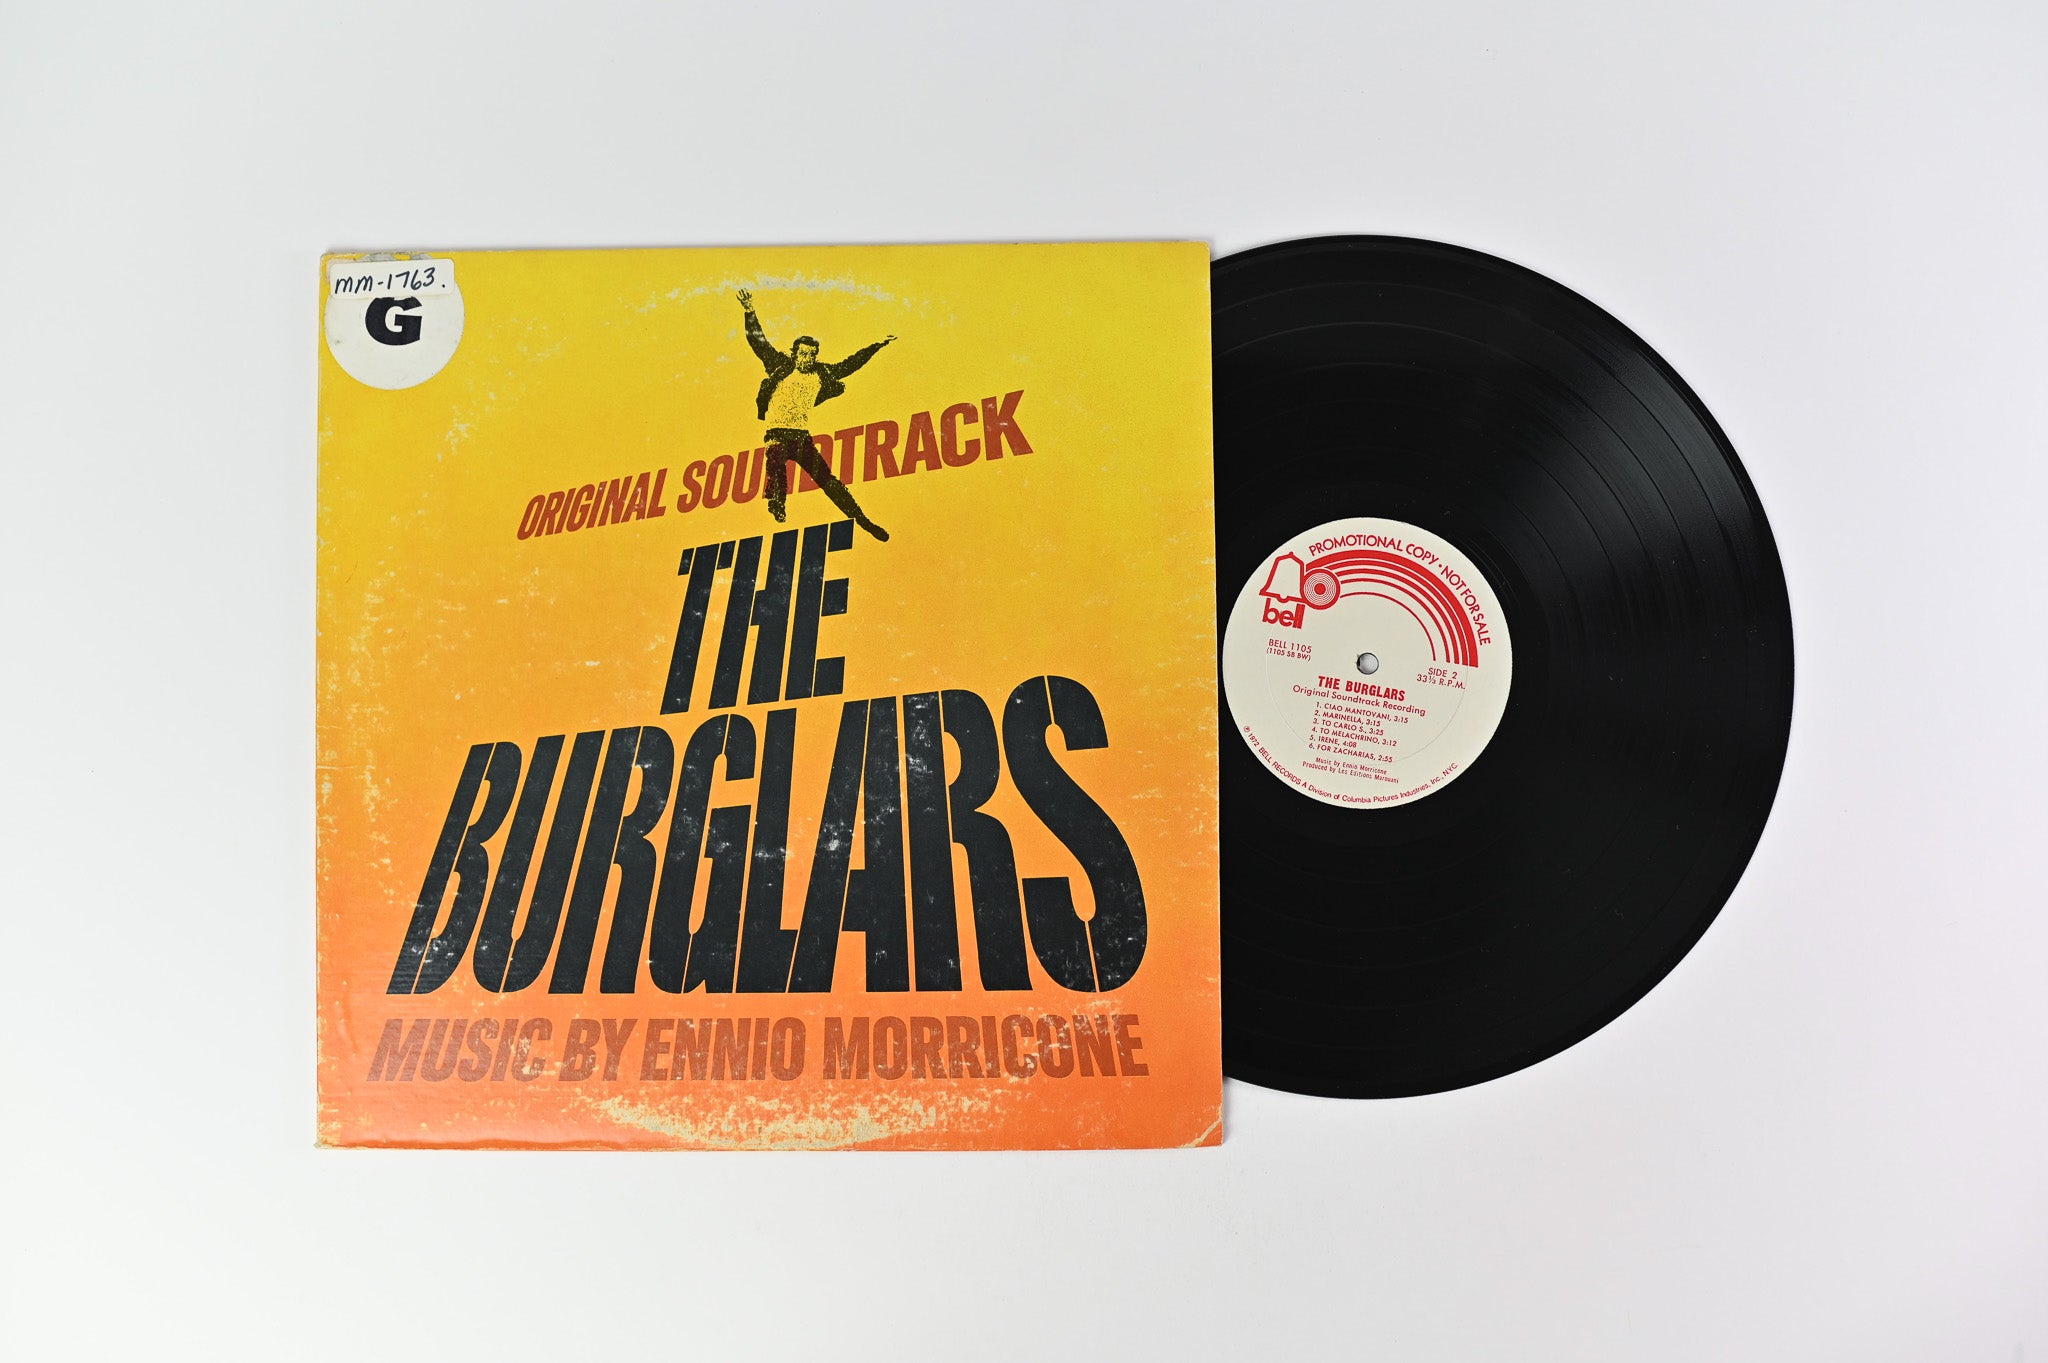 Ennio Morricone - The Burglars (Original Soundtrack) Promo on Bell Records